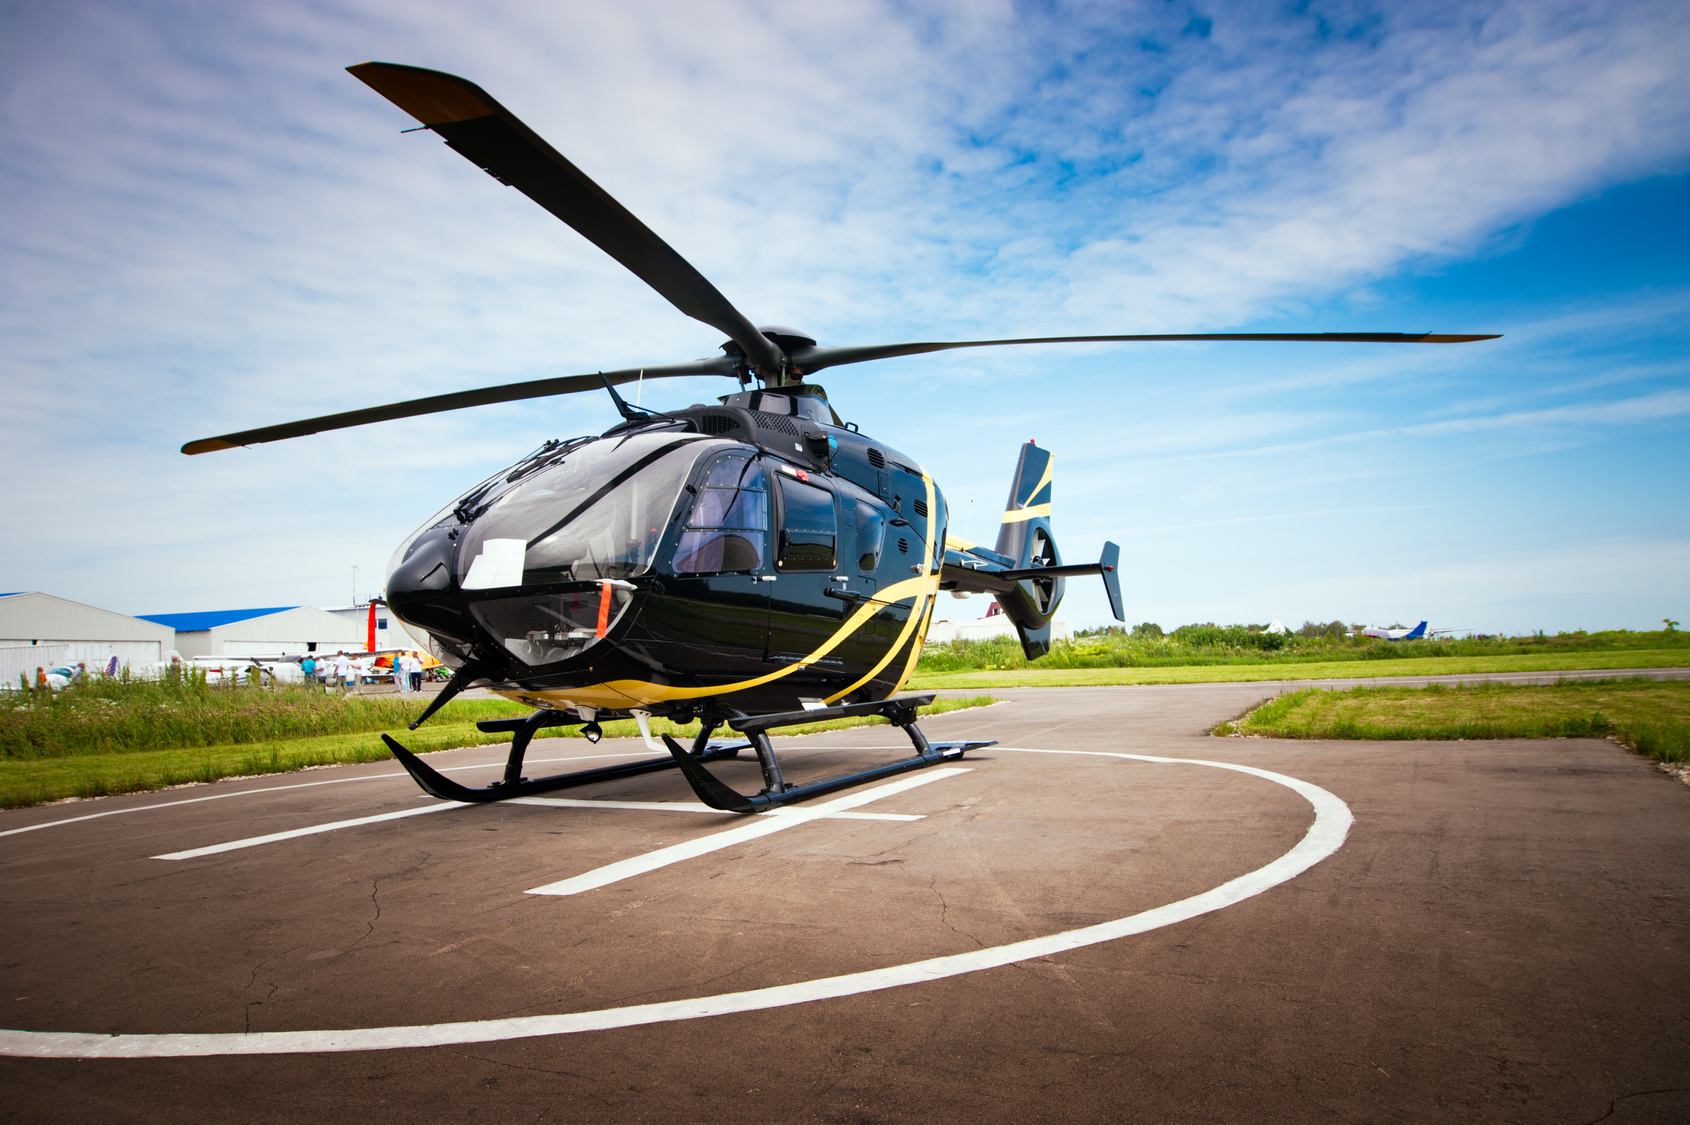 High Resolution Private Helicopter Hd Wallpaper Julchens Blog Welt